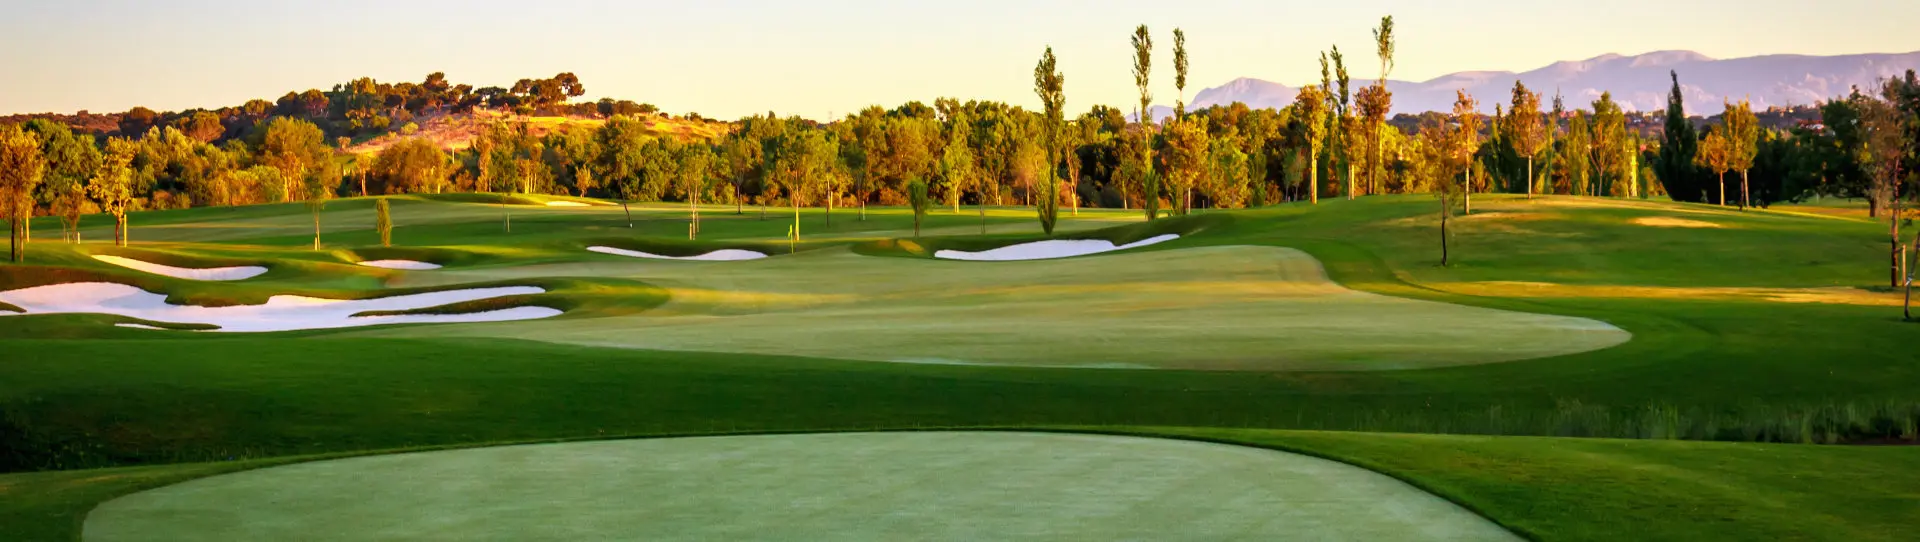 Spain golf courses - La Moraleja Golf Course III - Photo 1